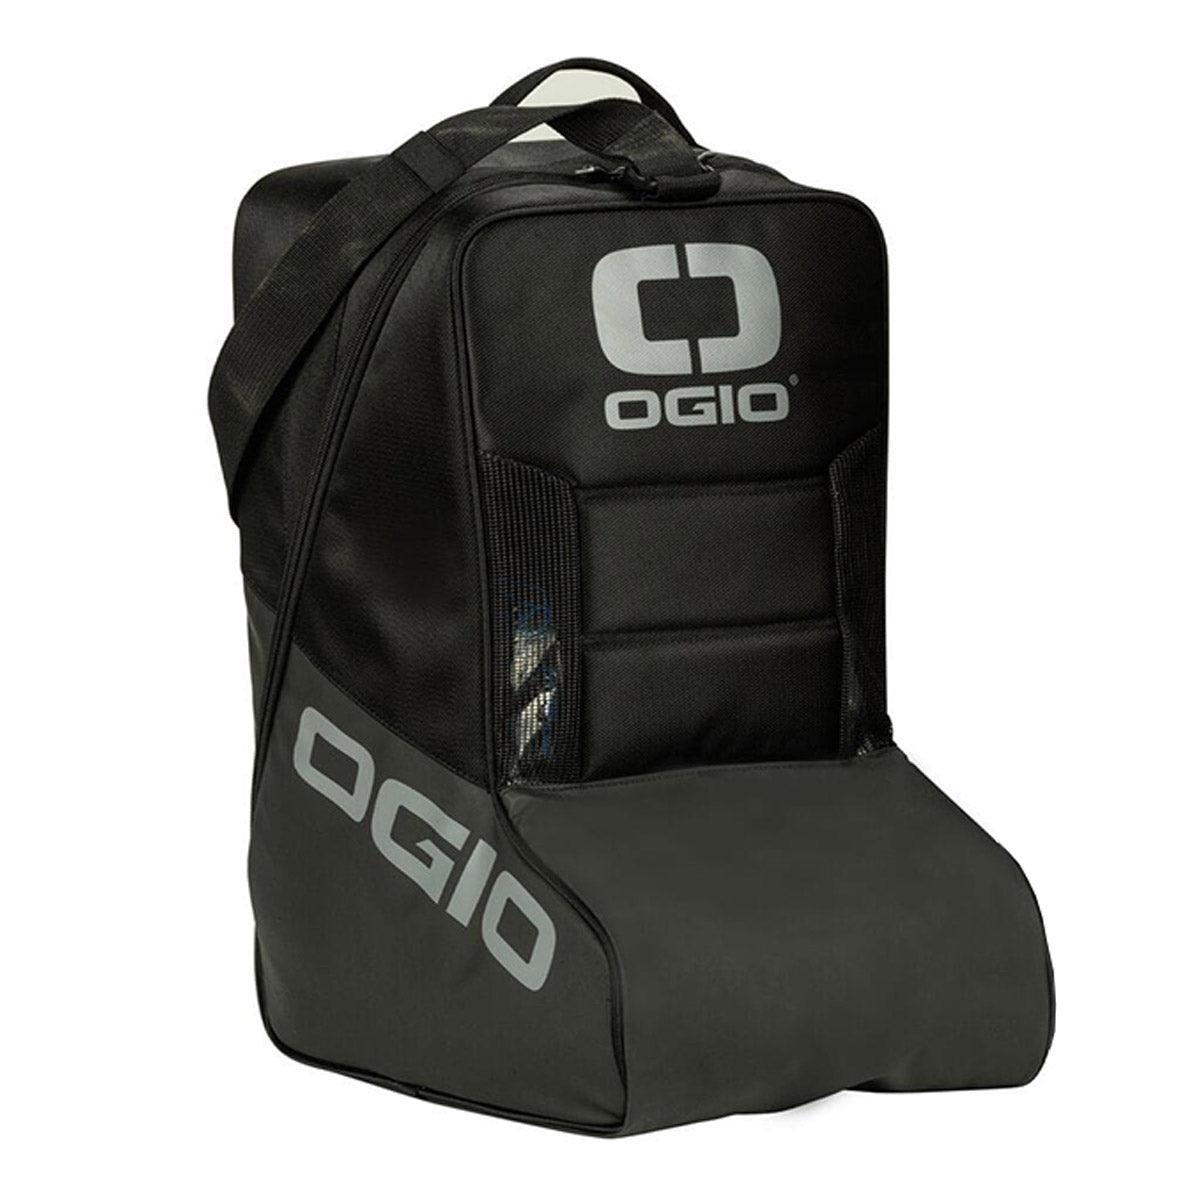 Ogio Rig 9800 PRO wheeled motocross kit bag with MX boot bag - boot bag